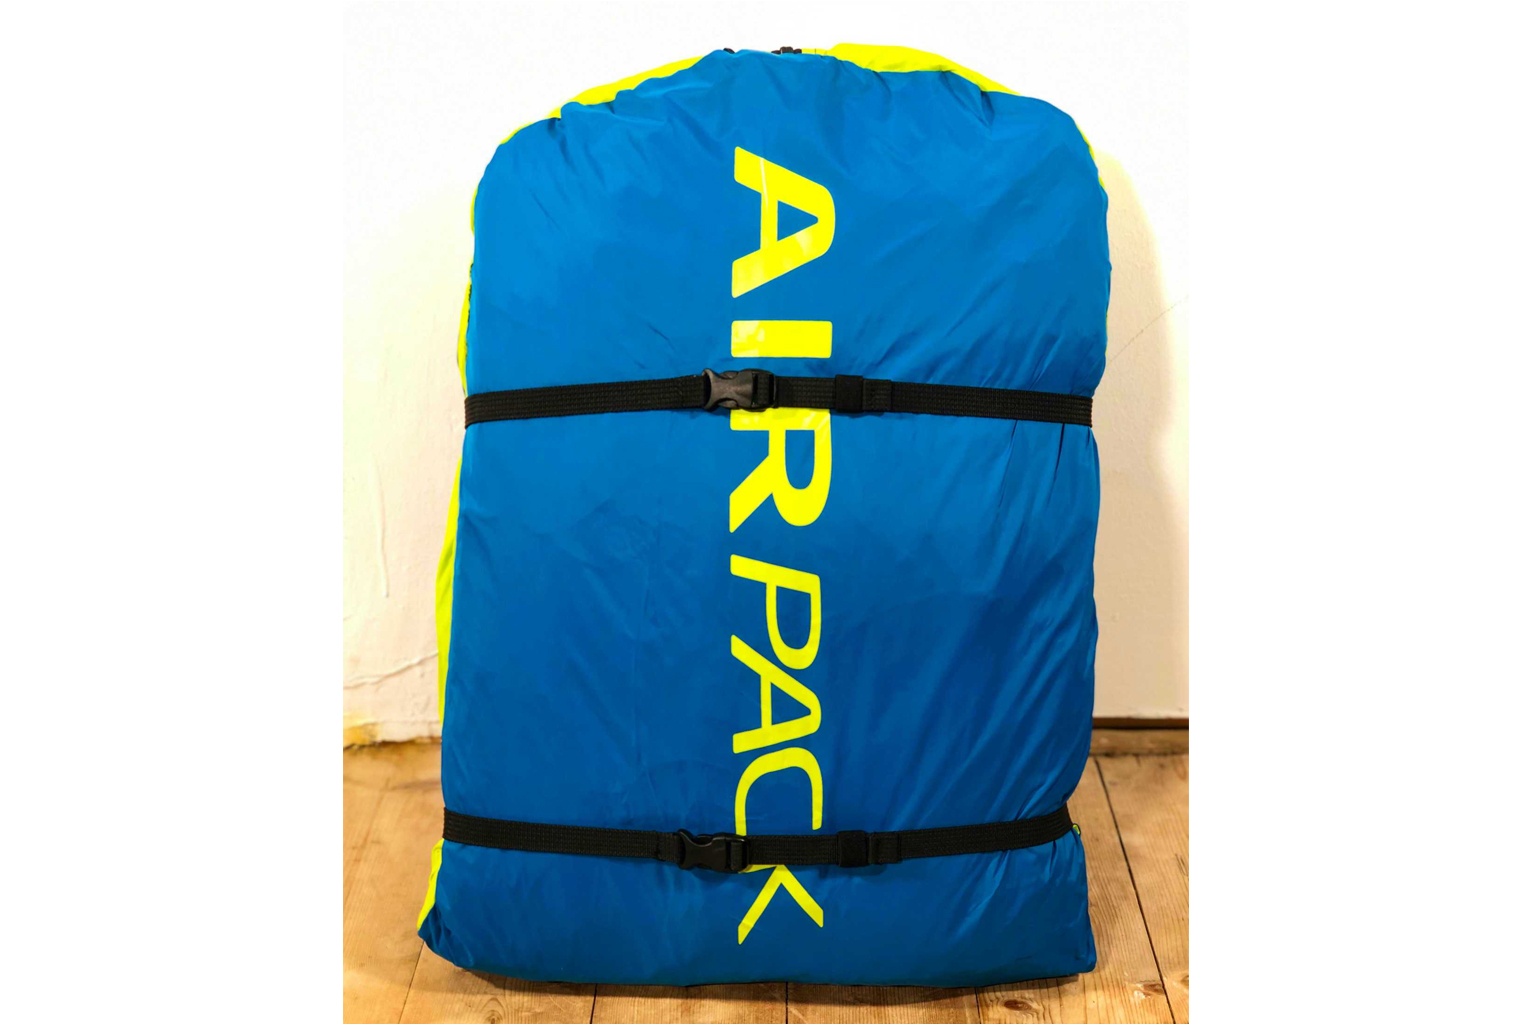 Airdesign AirPack 50/50 L